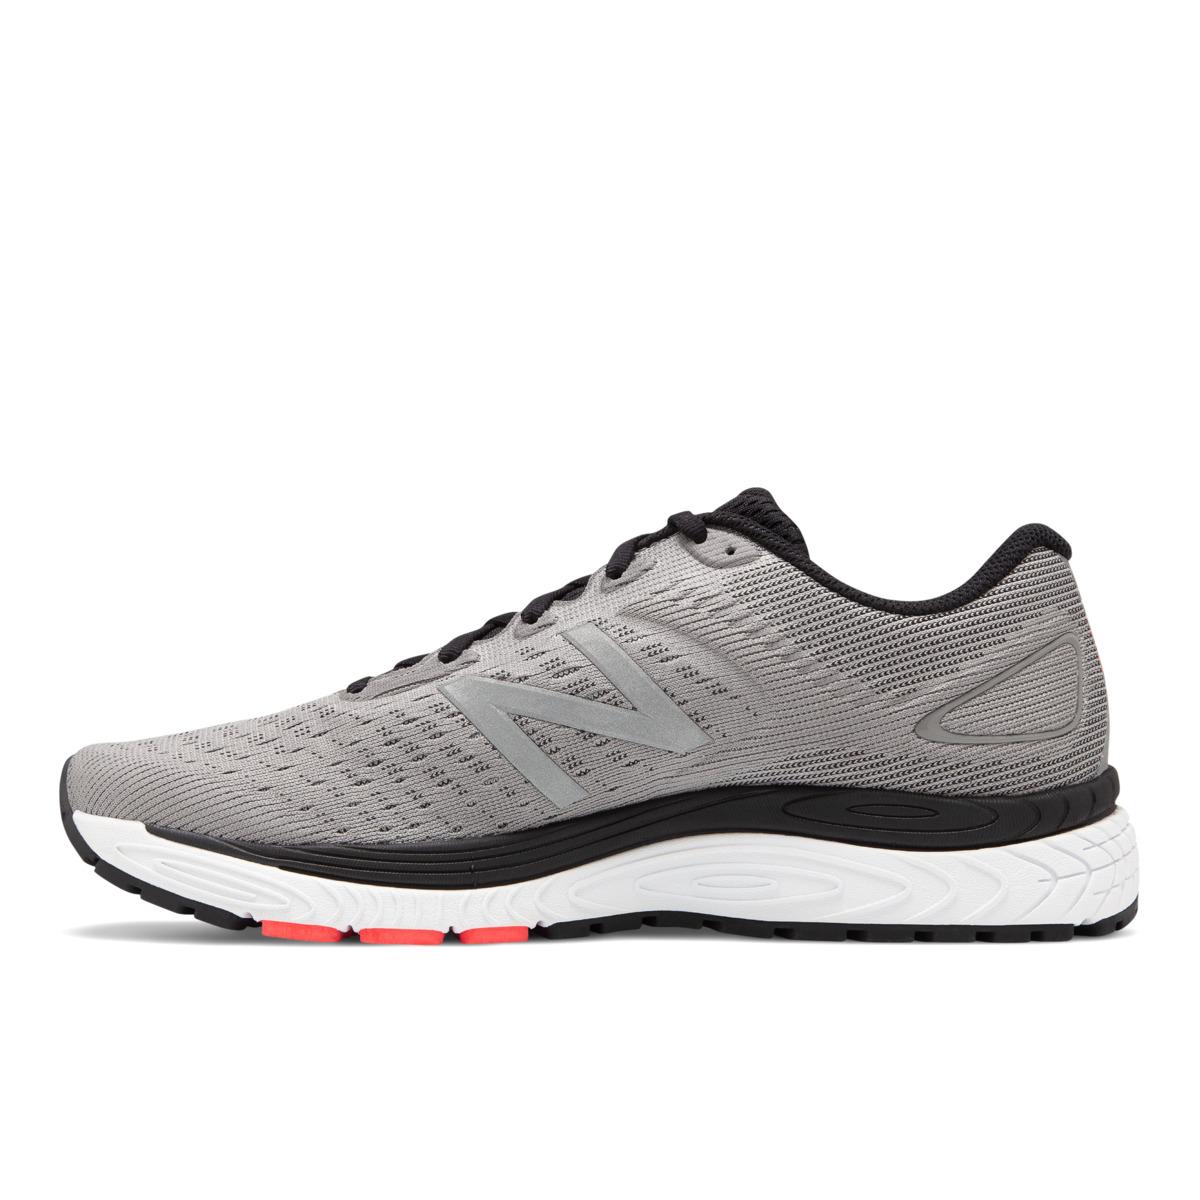 New Balance Rubber Solvi Running Shoes in Grey (Gray) for Men - Lyst